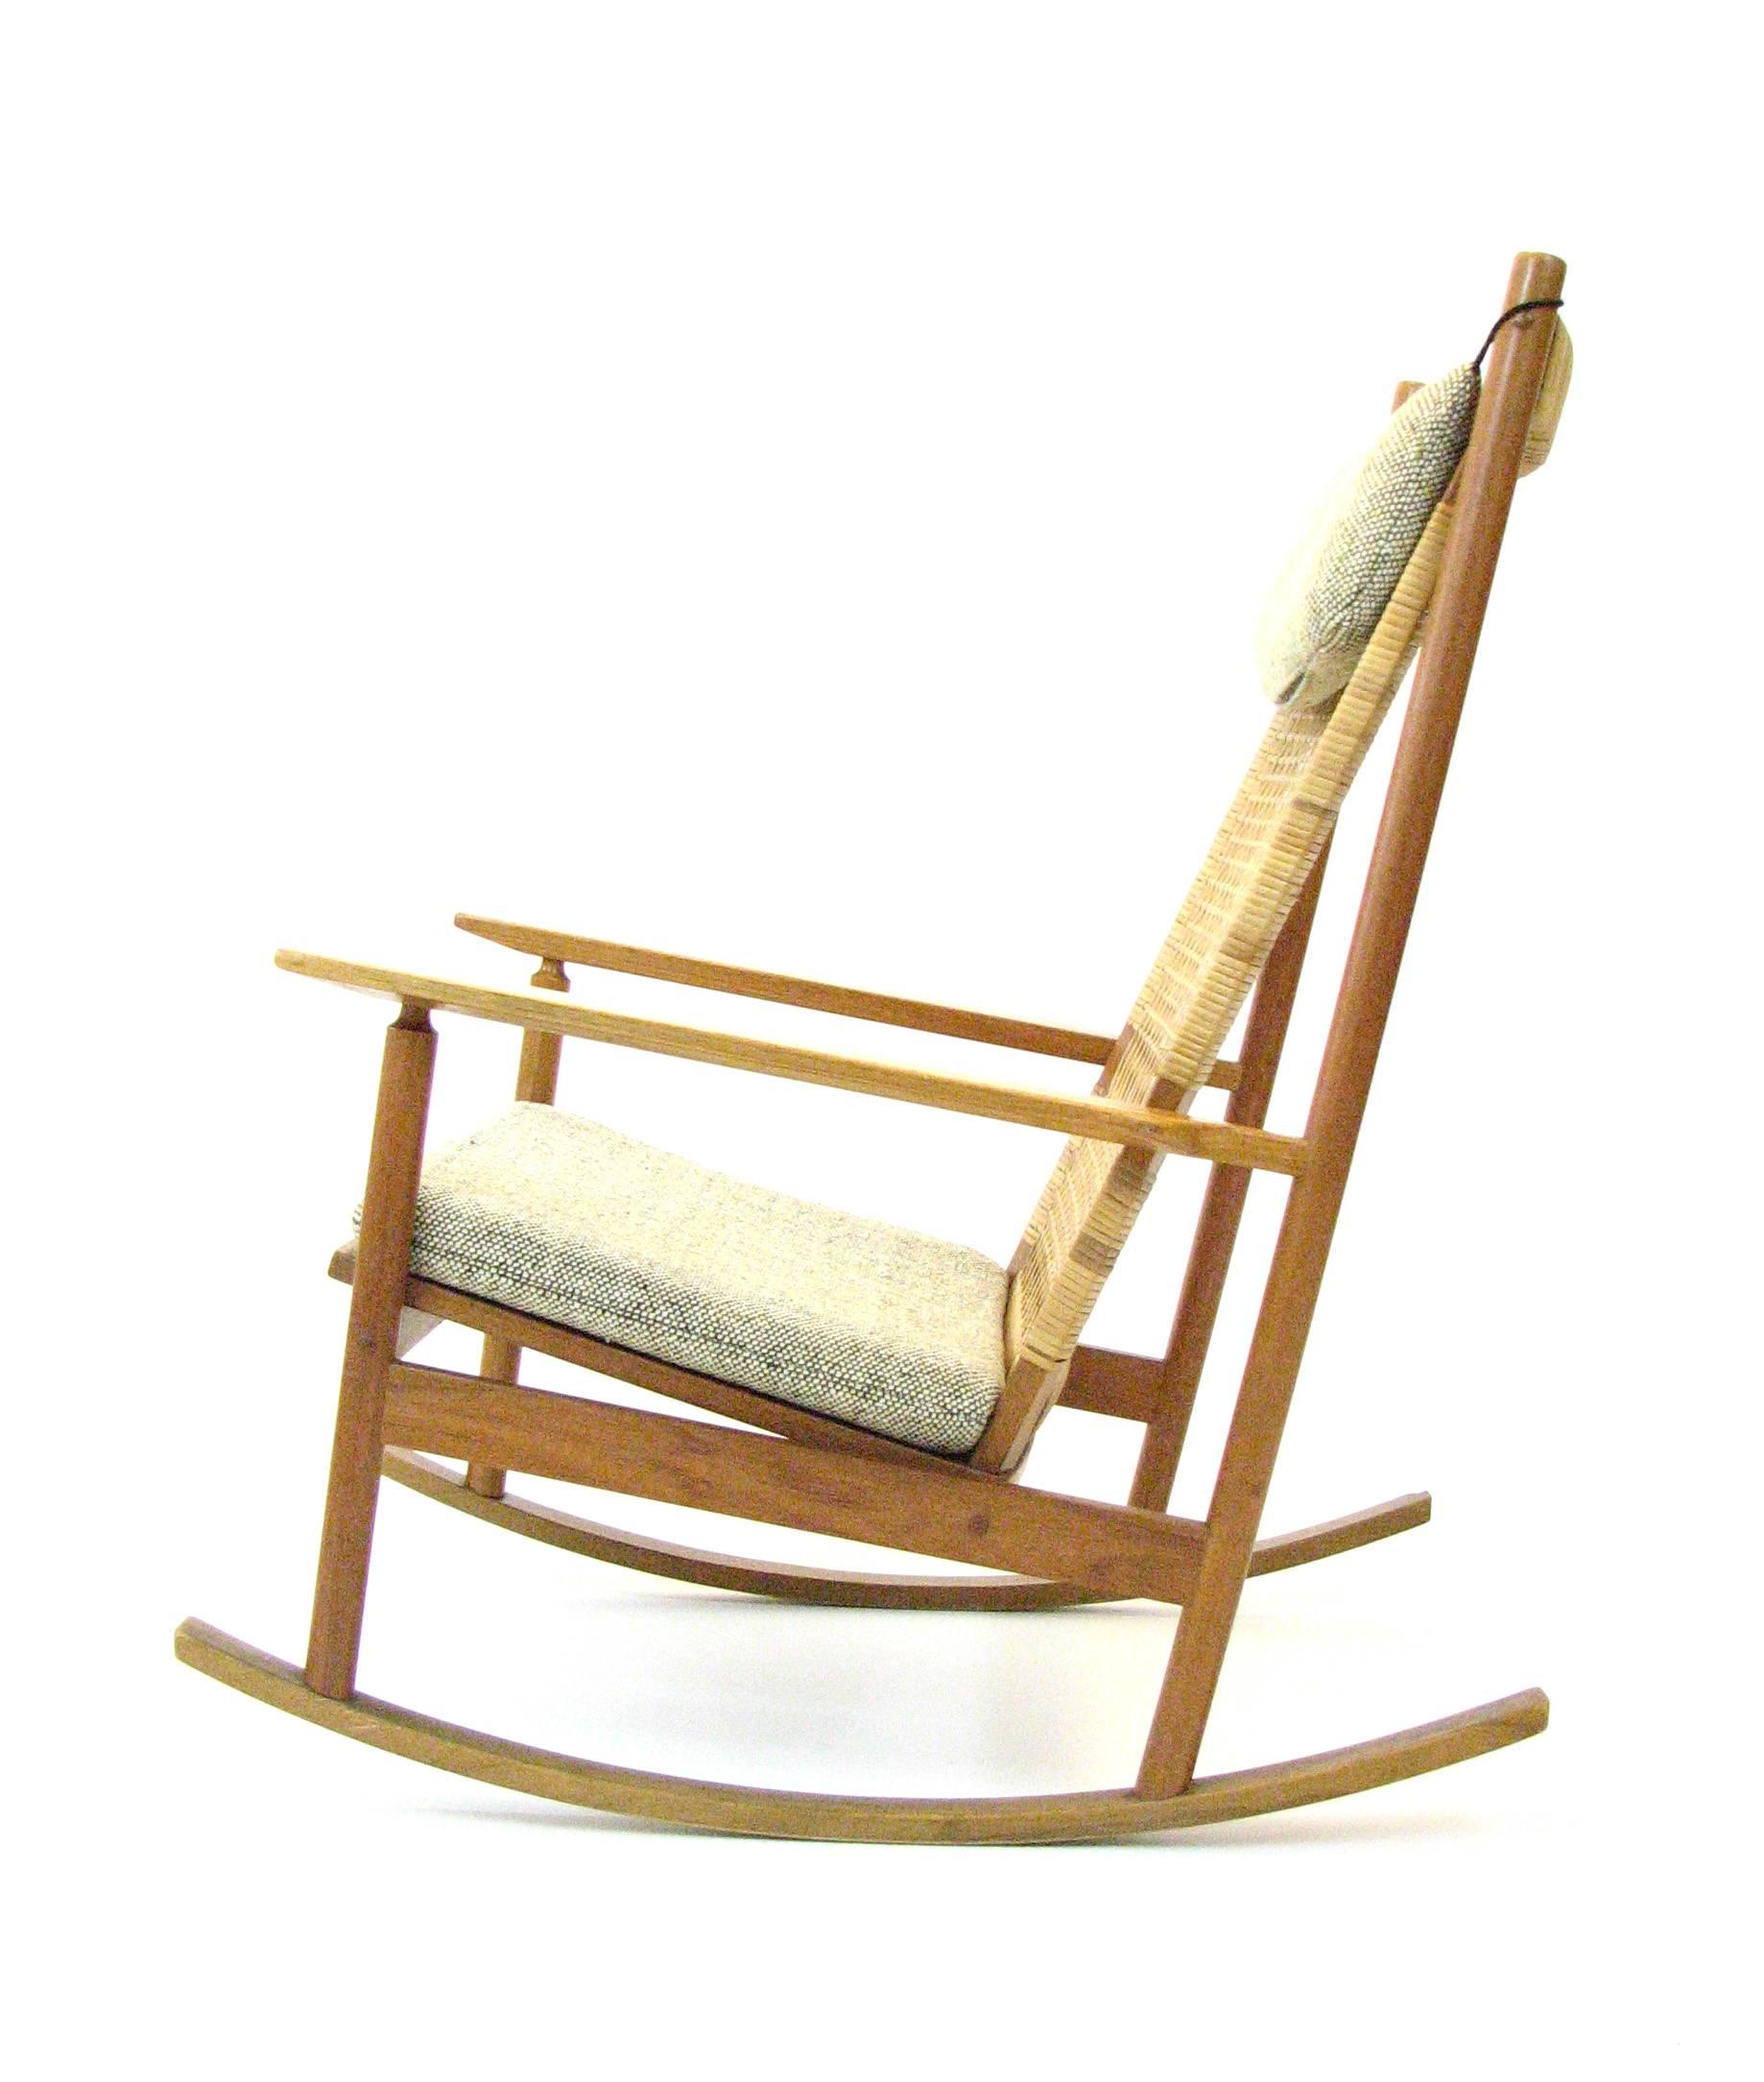 20th Century Danish Teak and Cane Rocking Chair by Hans Olsen for Brdr Juul-Kristensen